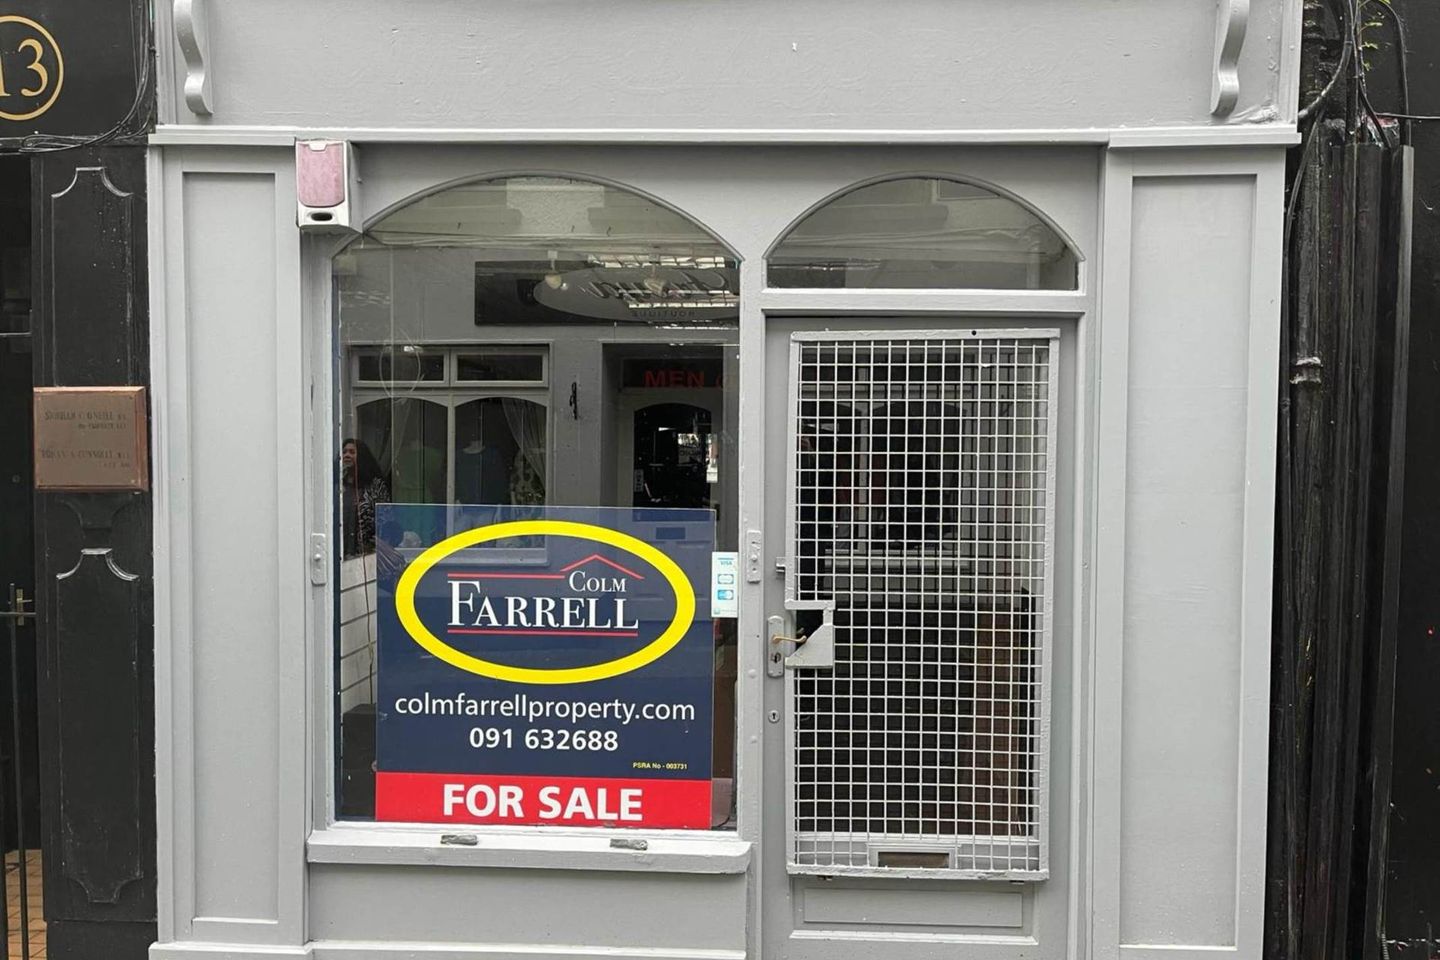 11 Parnell Street, Ennis, Co. Clare, V95PD89